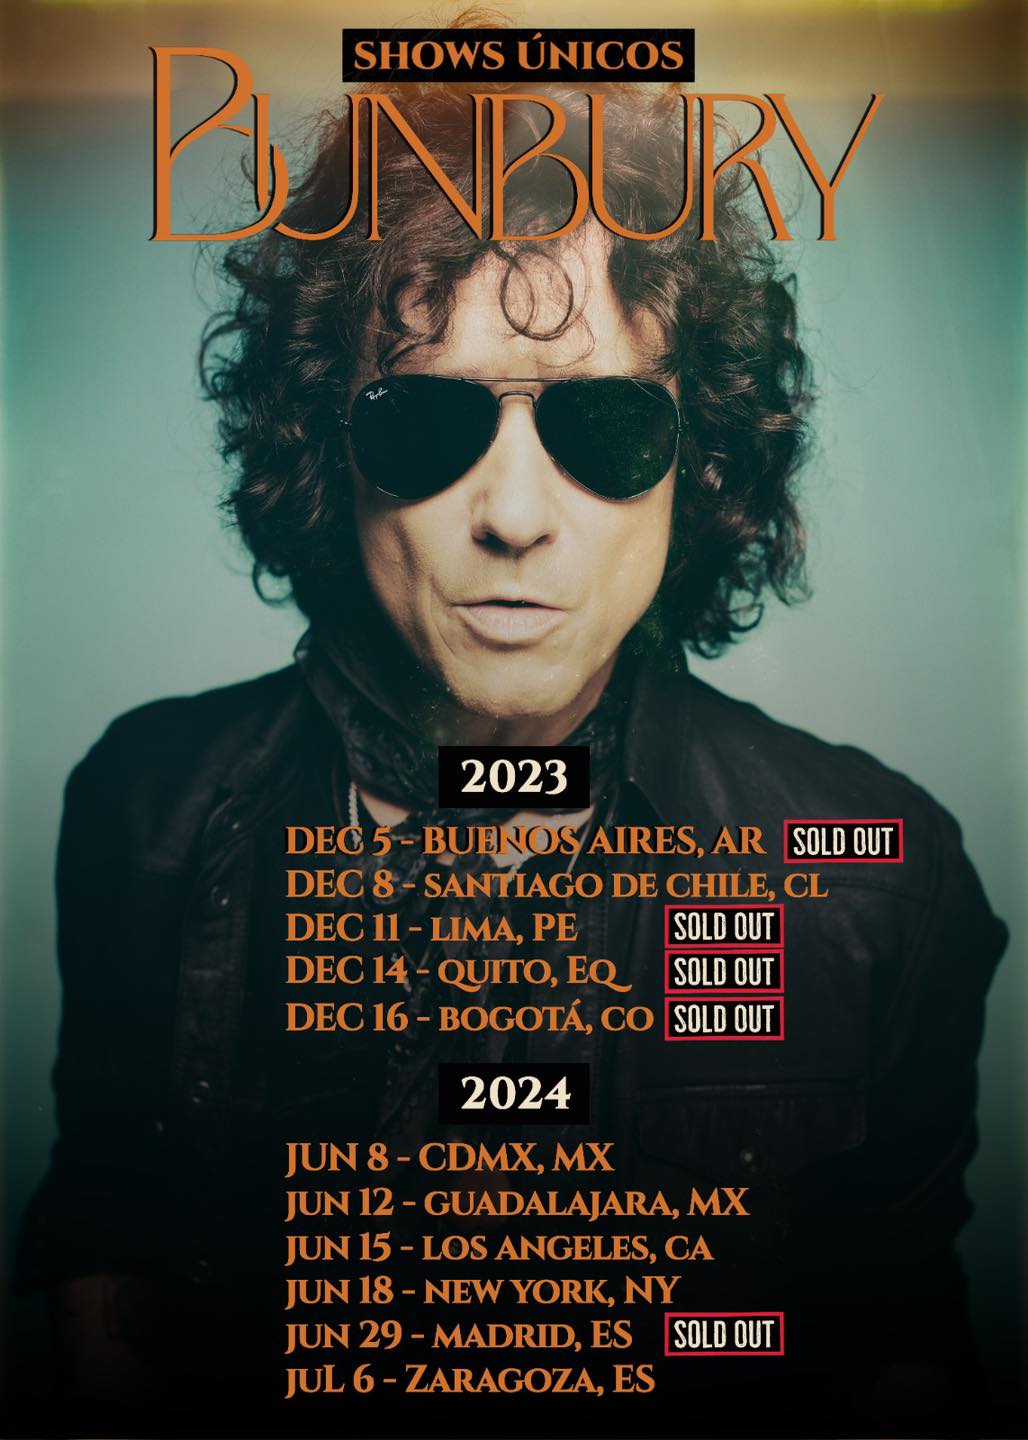 Artista destacado 2023/2024: Bunbury, gira 11 conciertos únicos por América y España. Discos a la venta thumbnail